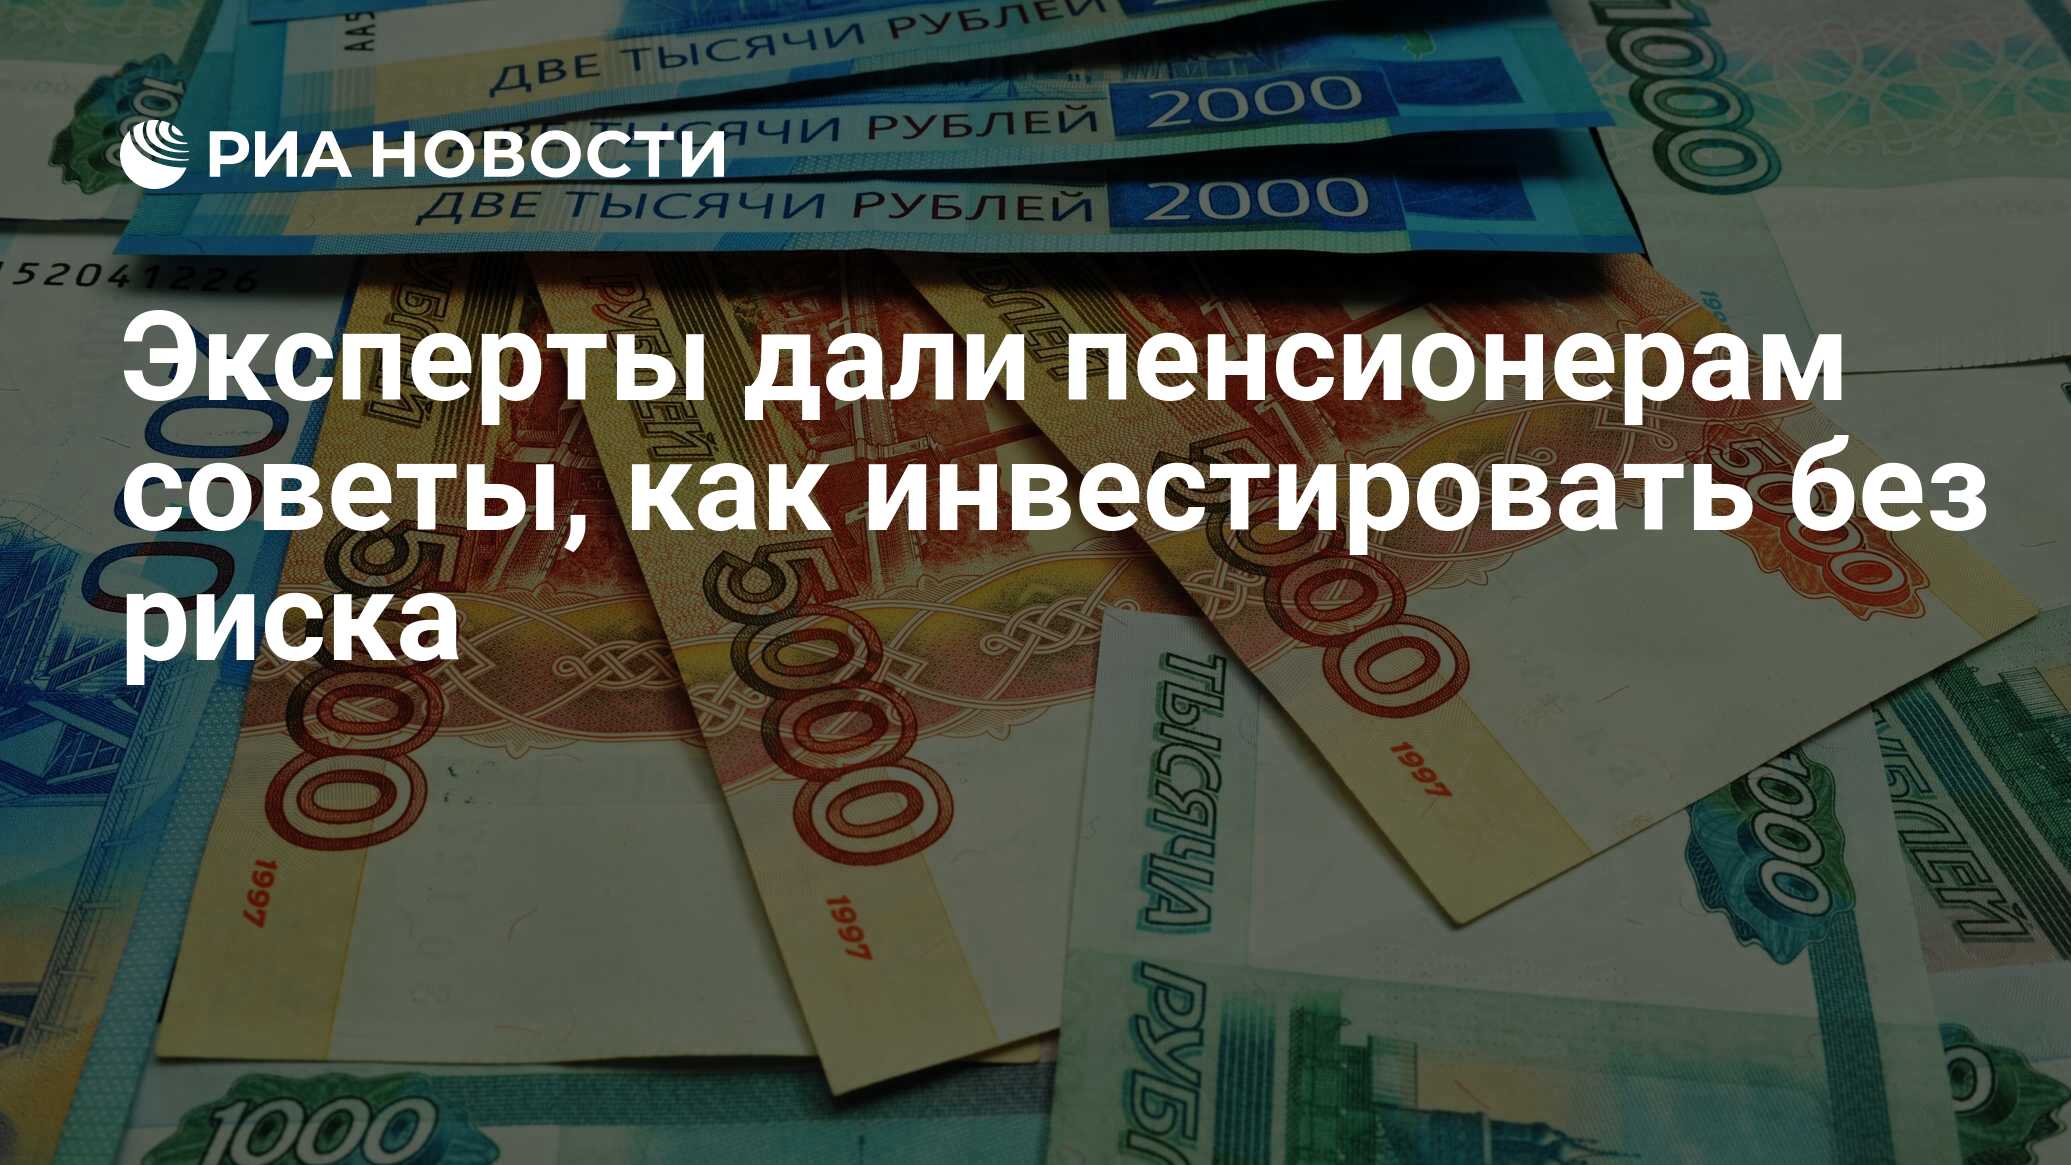 Пенсионерам 10000 рублей